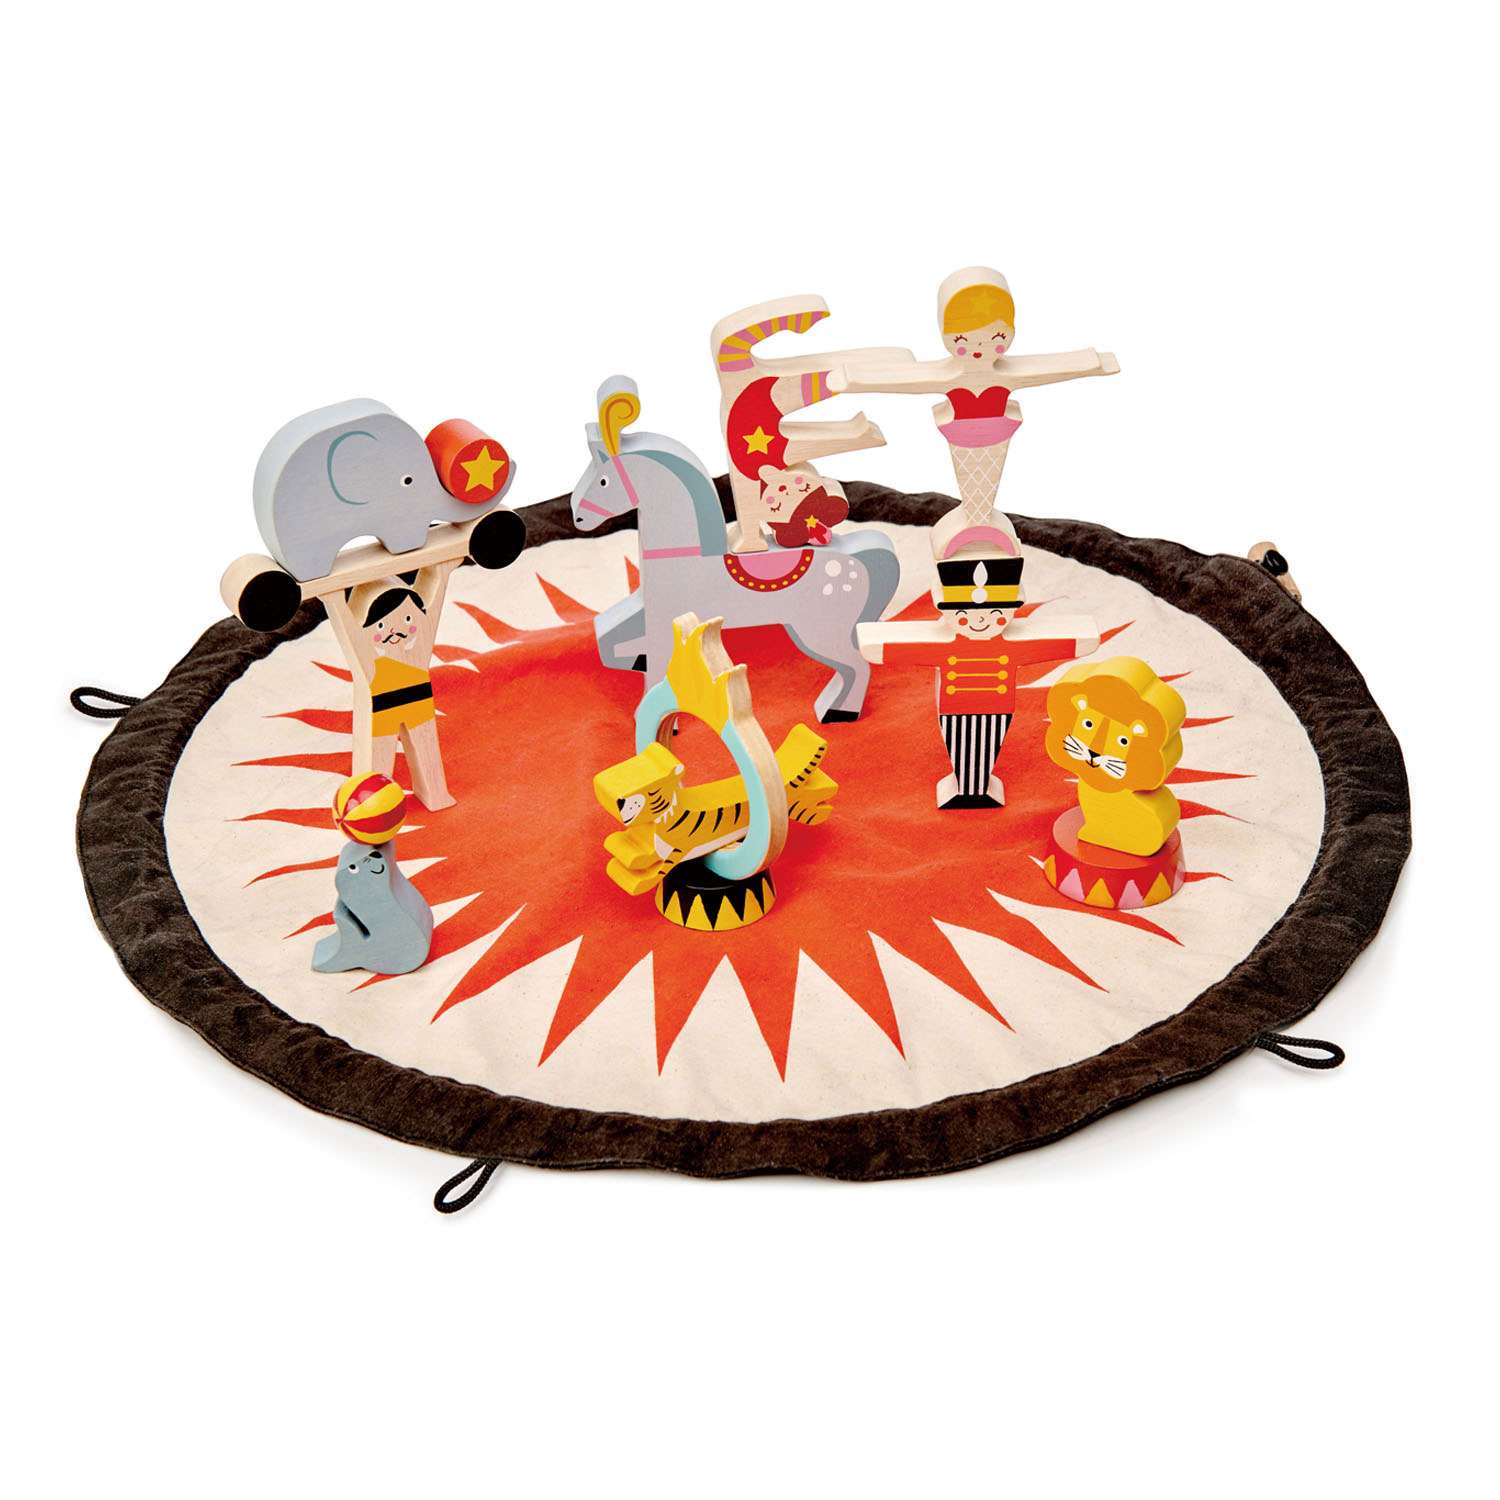 Tender Leaf Toys ของเล่นไม้ ของเล่นเสริมพัฒนาการ กองละครสัตว์ Circus Stacker